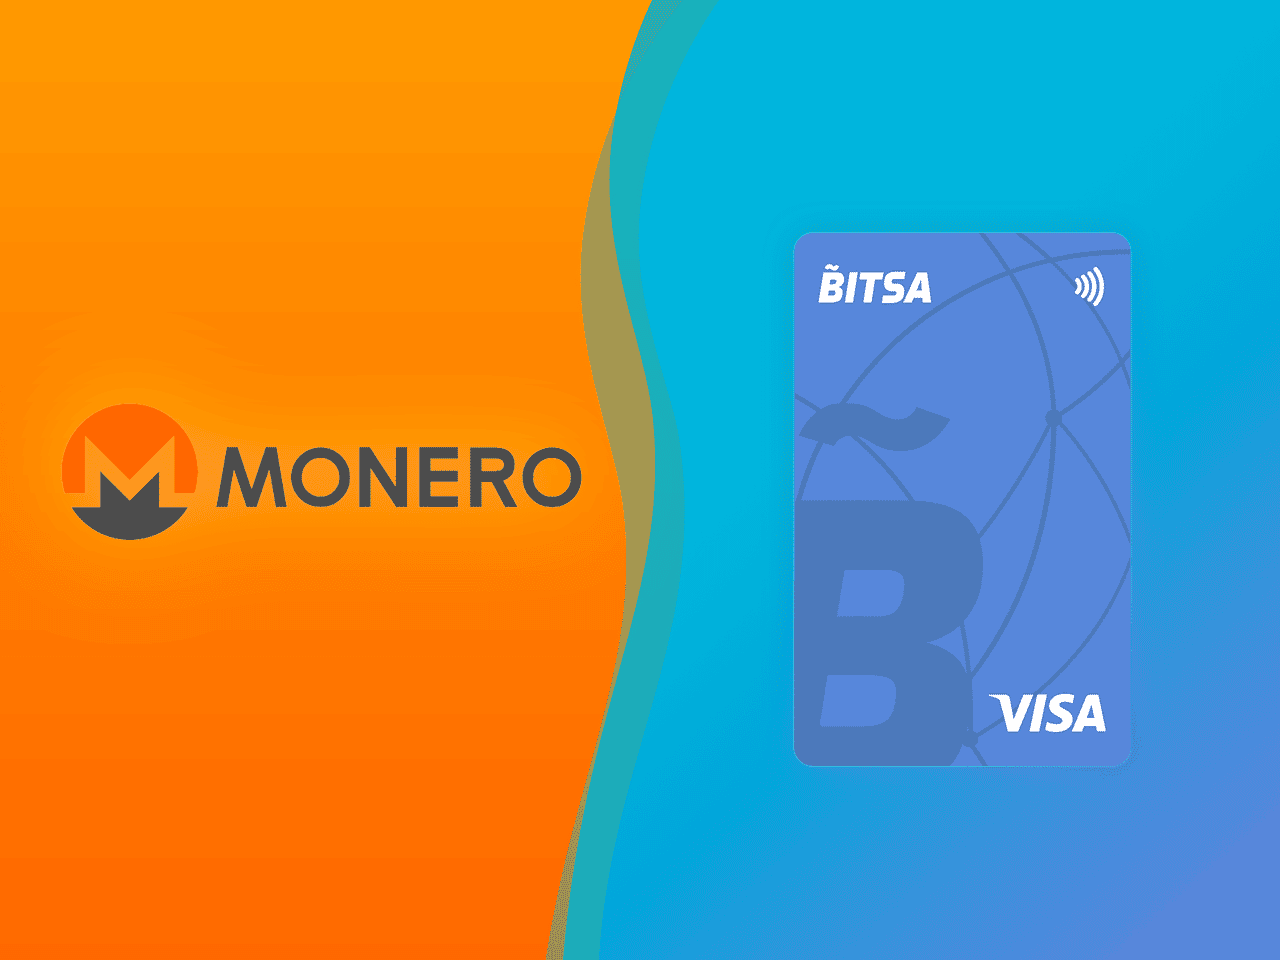 Kraken Allow Buying Of Monero With A Debit Or Credit Card